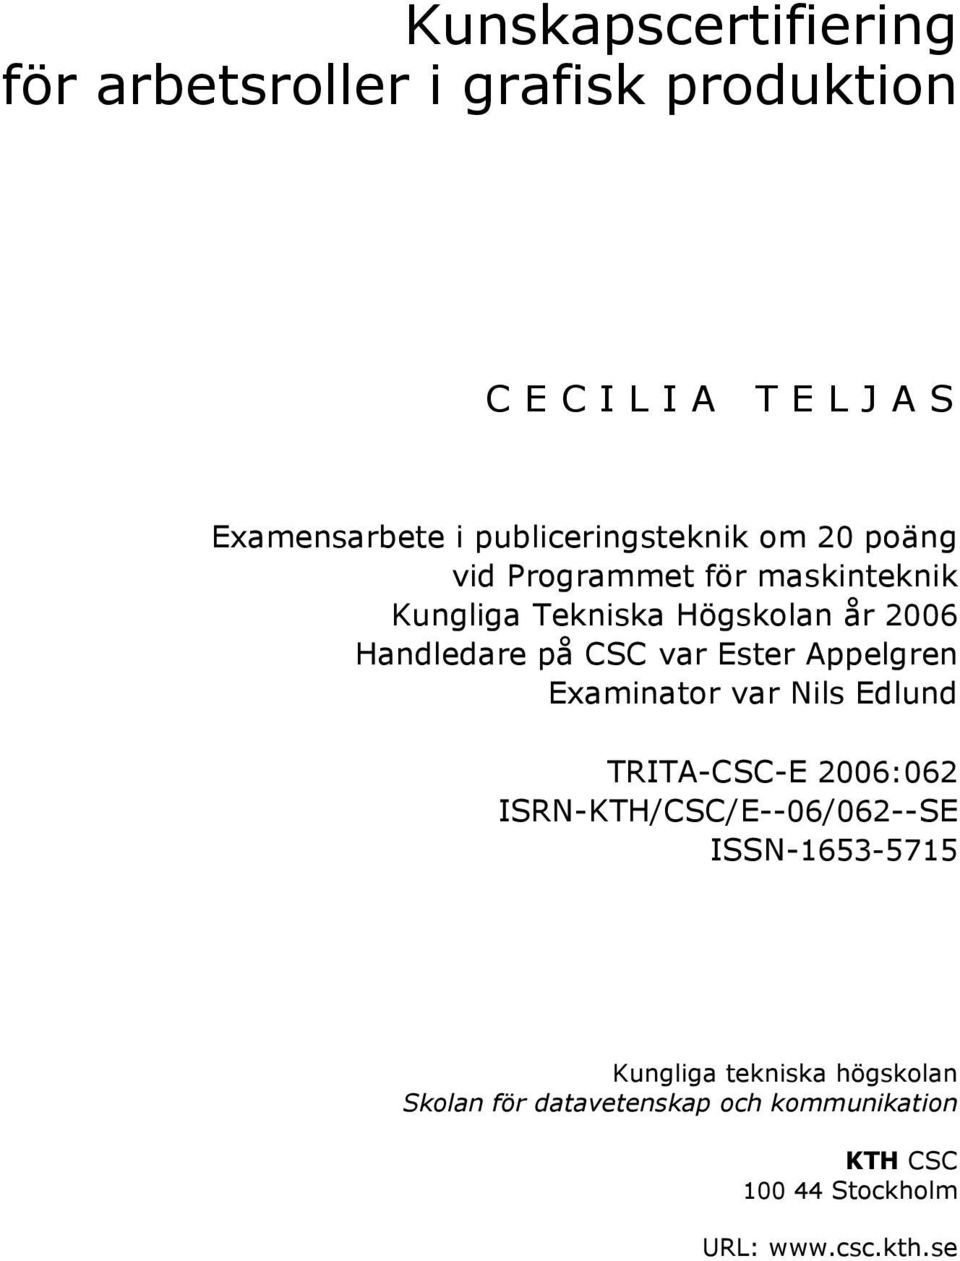 på CSC var Ester Appelgren Examinator var Nils Edlund TRITA-CSC-E 2006:062 ISRN-KTH/CSC/E--06/062--SE